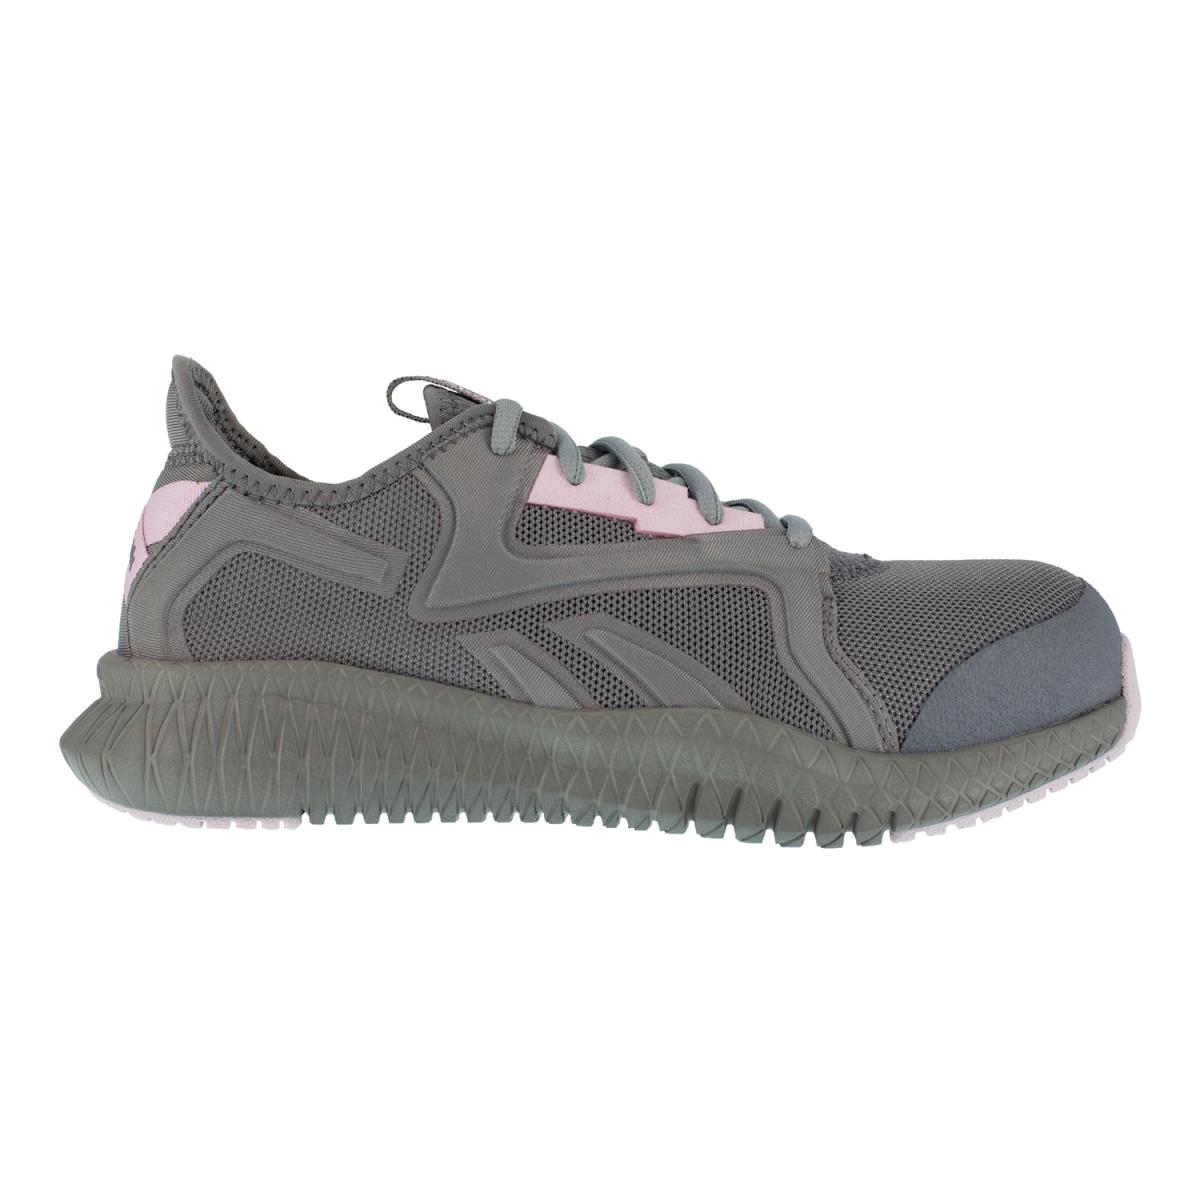 Reebok Womens Grey/pink Textile Work Shoes Flexagon Athletic CT EH M